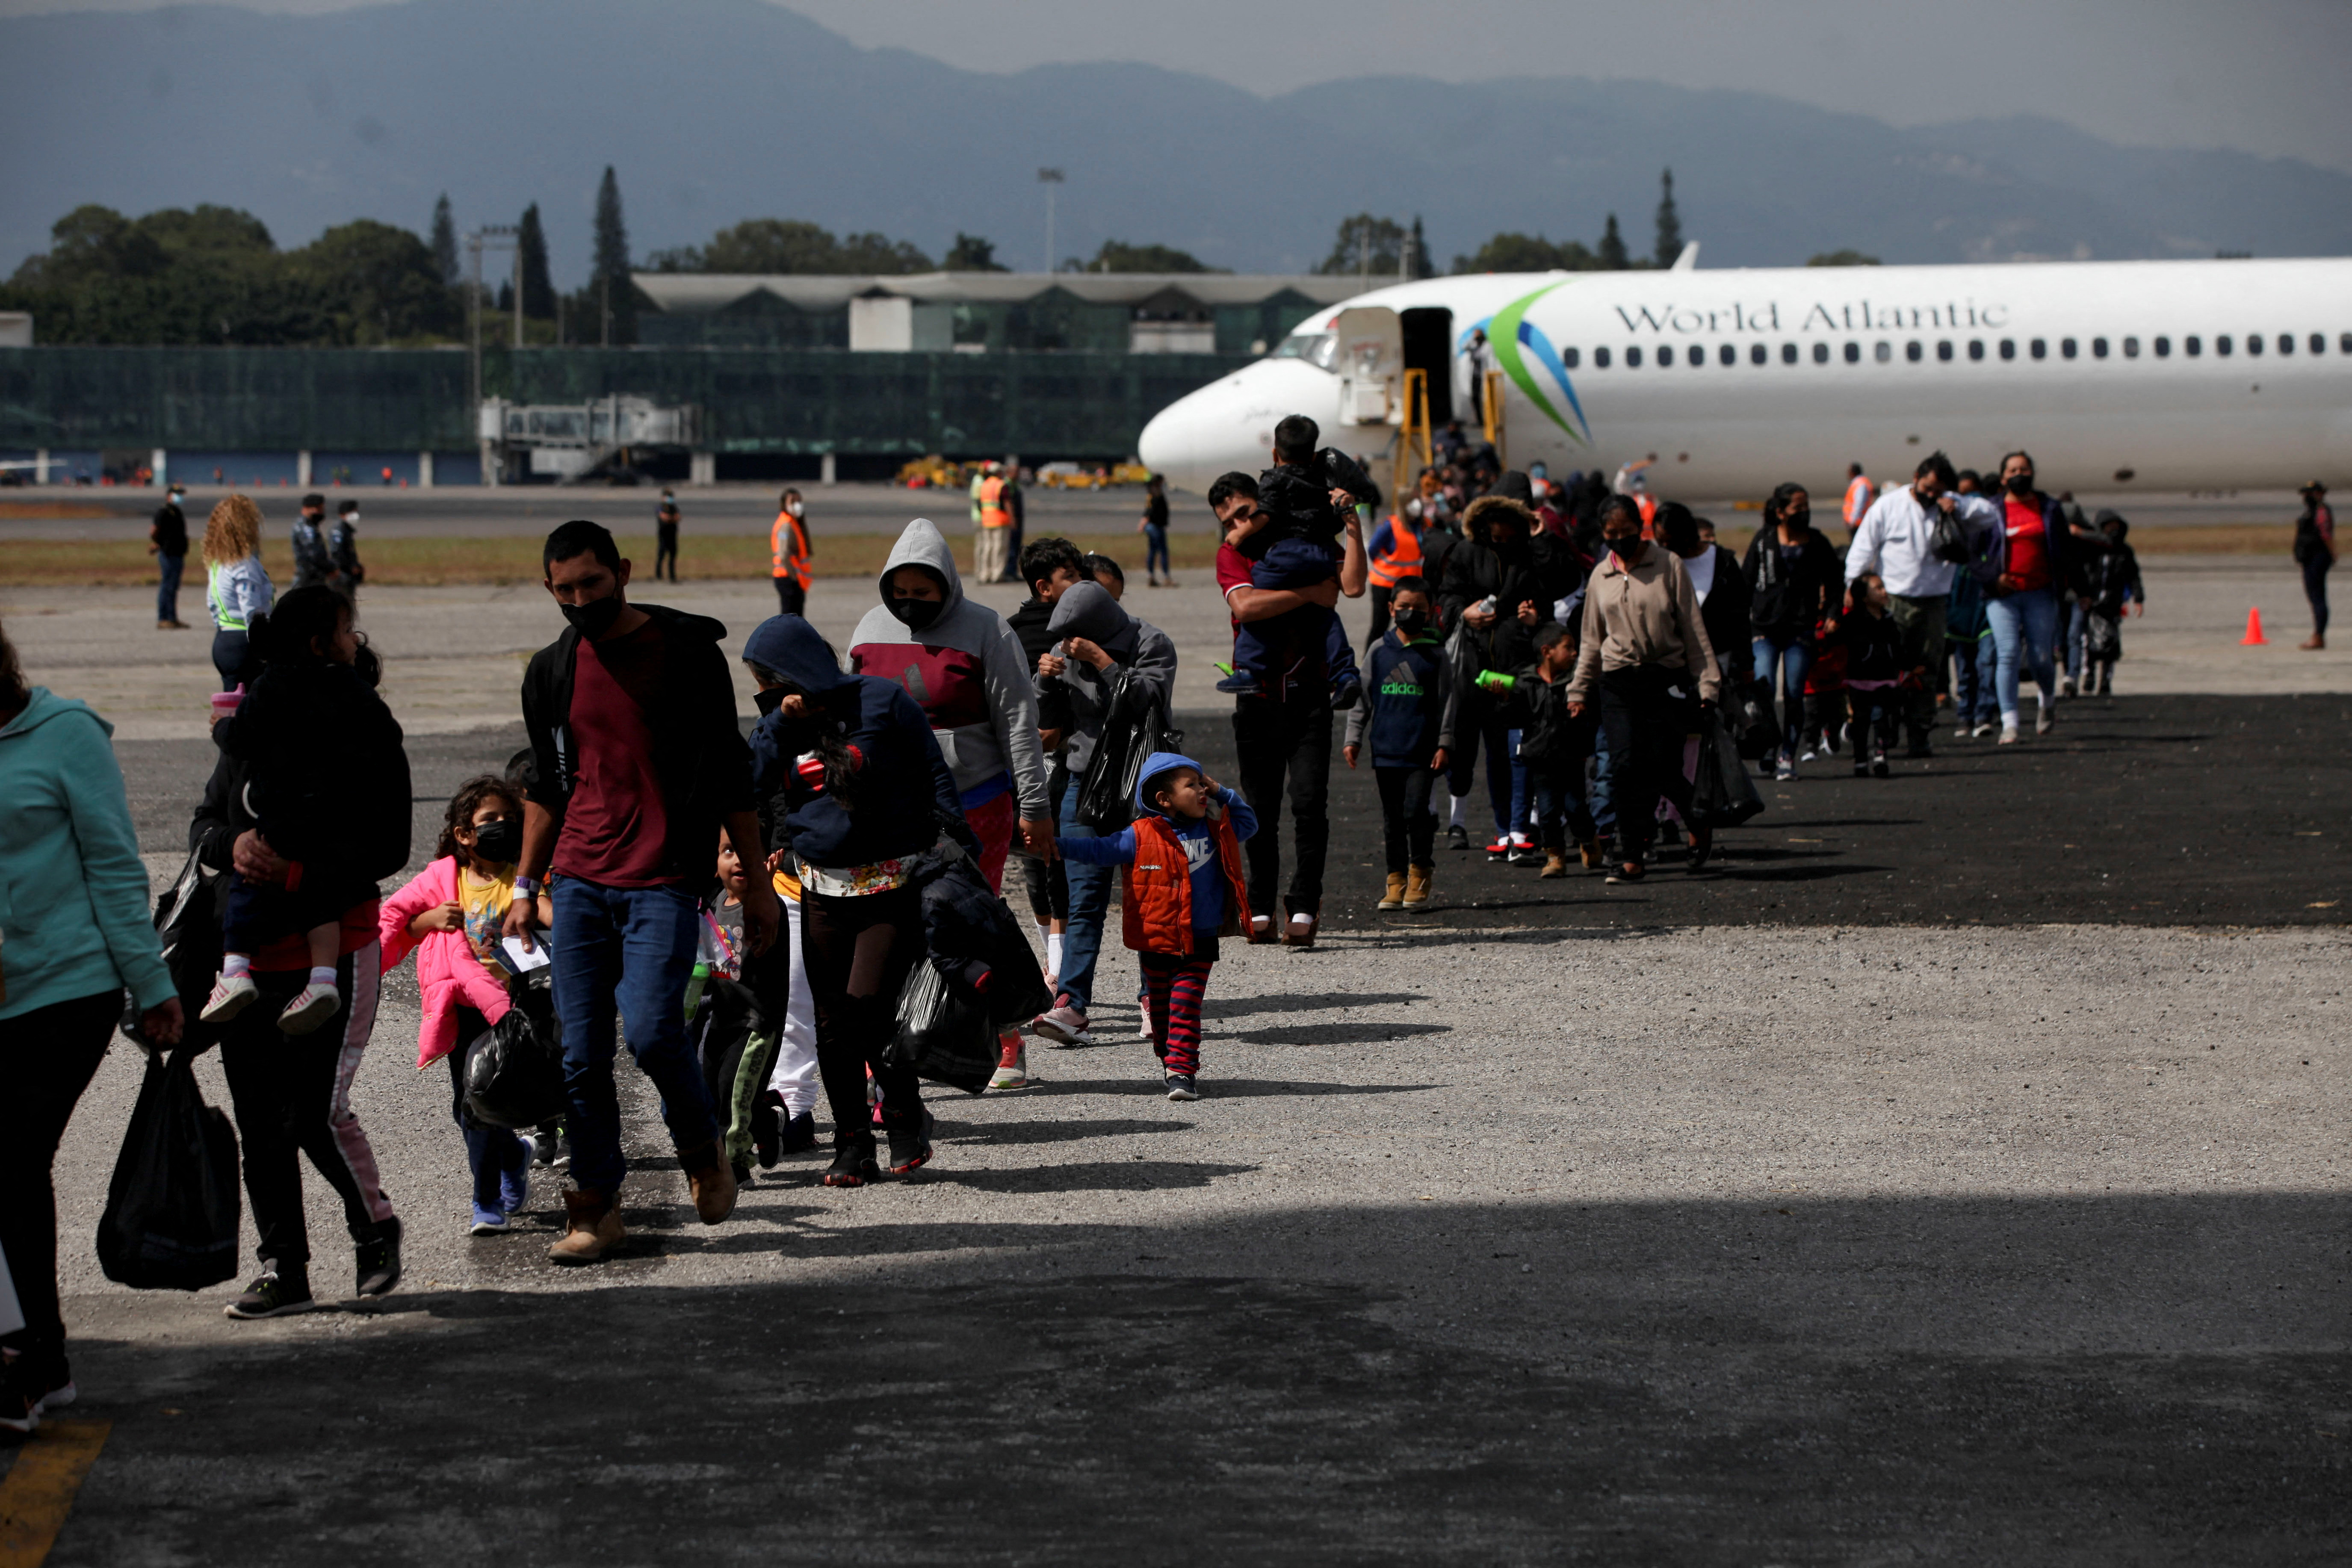 Guatemalan deportees cross the tarmac after arriving on a deportation flight from the U.S., at the Guatemalan Air Force (FAG) headquarters in La Aurora International airport, in Guatemala City, Guatemala December 28, 2021. REUTERS/Sandra Sebastian